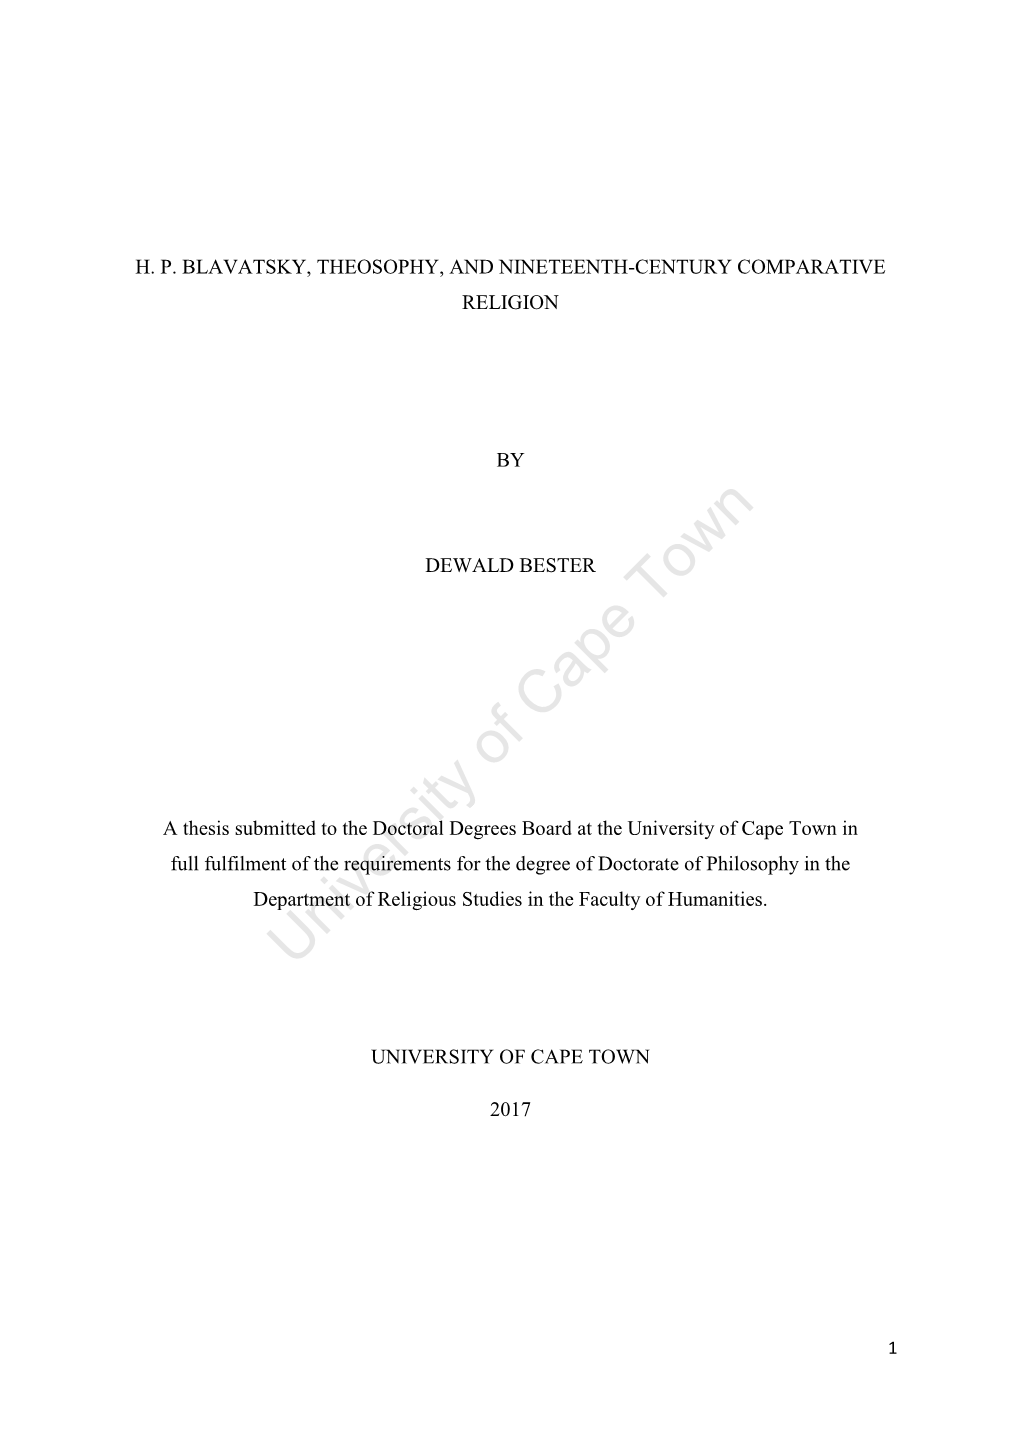 H.P Blavatsky, Theosophy, and Nineteenth-Century Comparative Religion